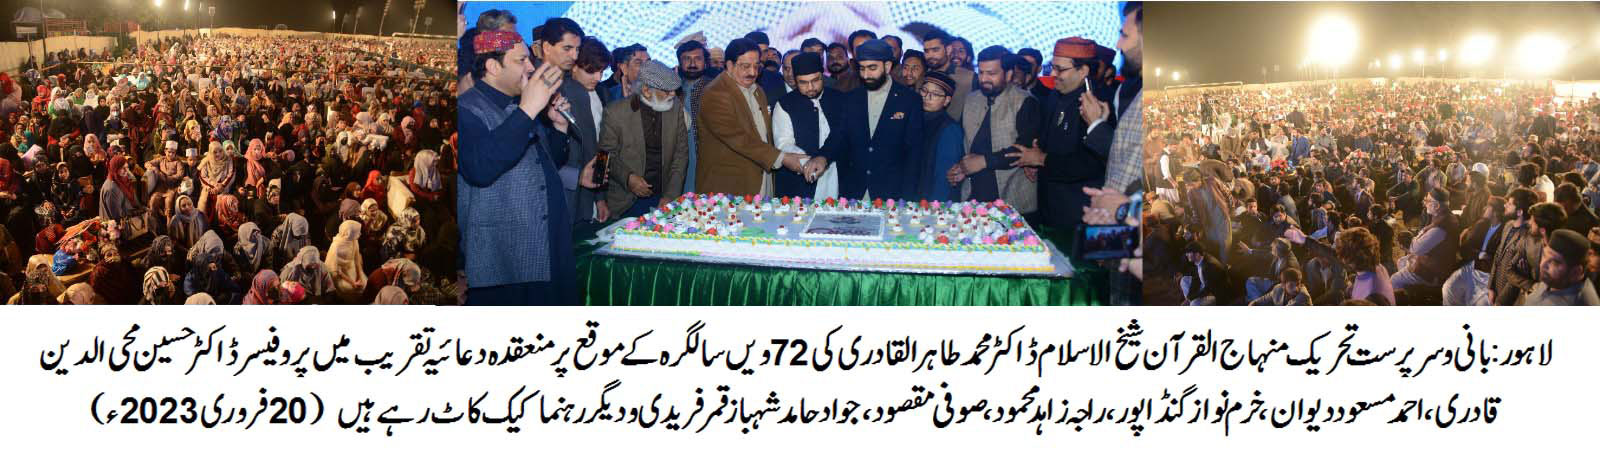 Dr Tahir ul Qadri birthday celebrations